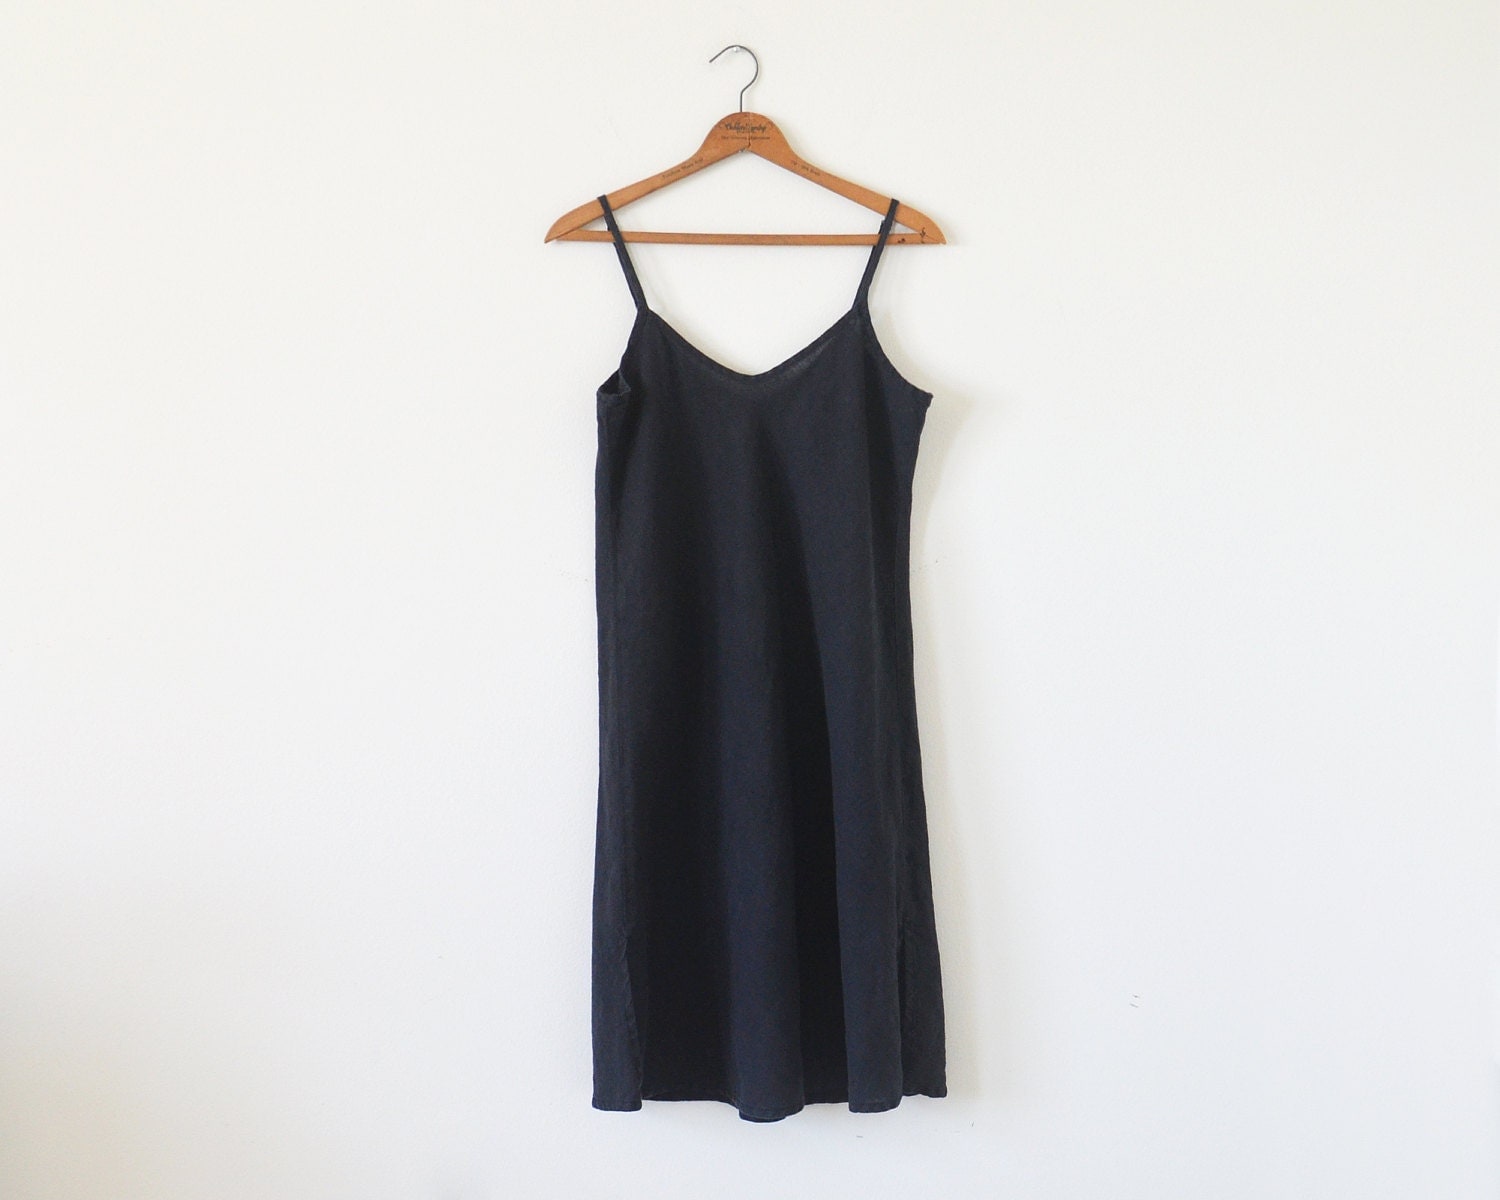 Vintage FLAX dress / black sleeveless dress / linen dress